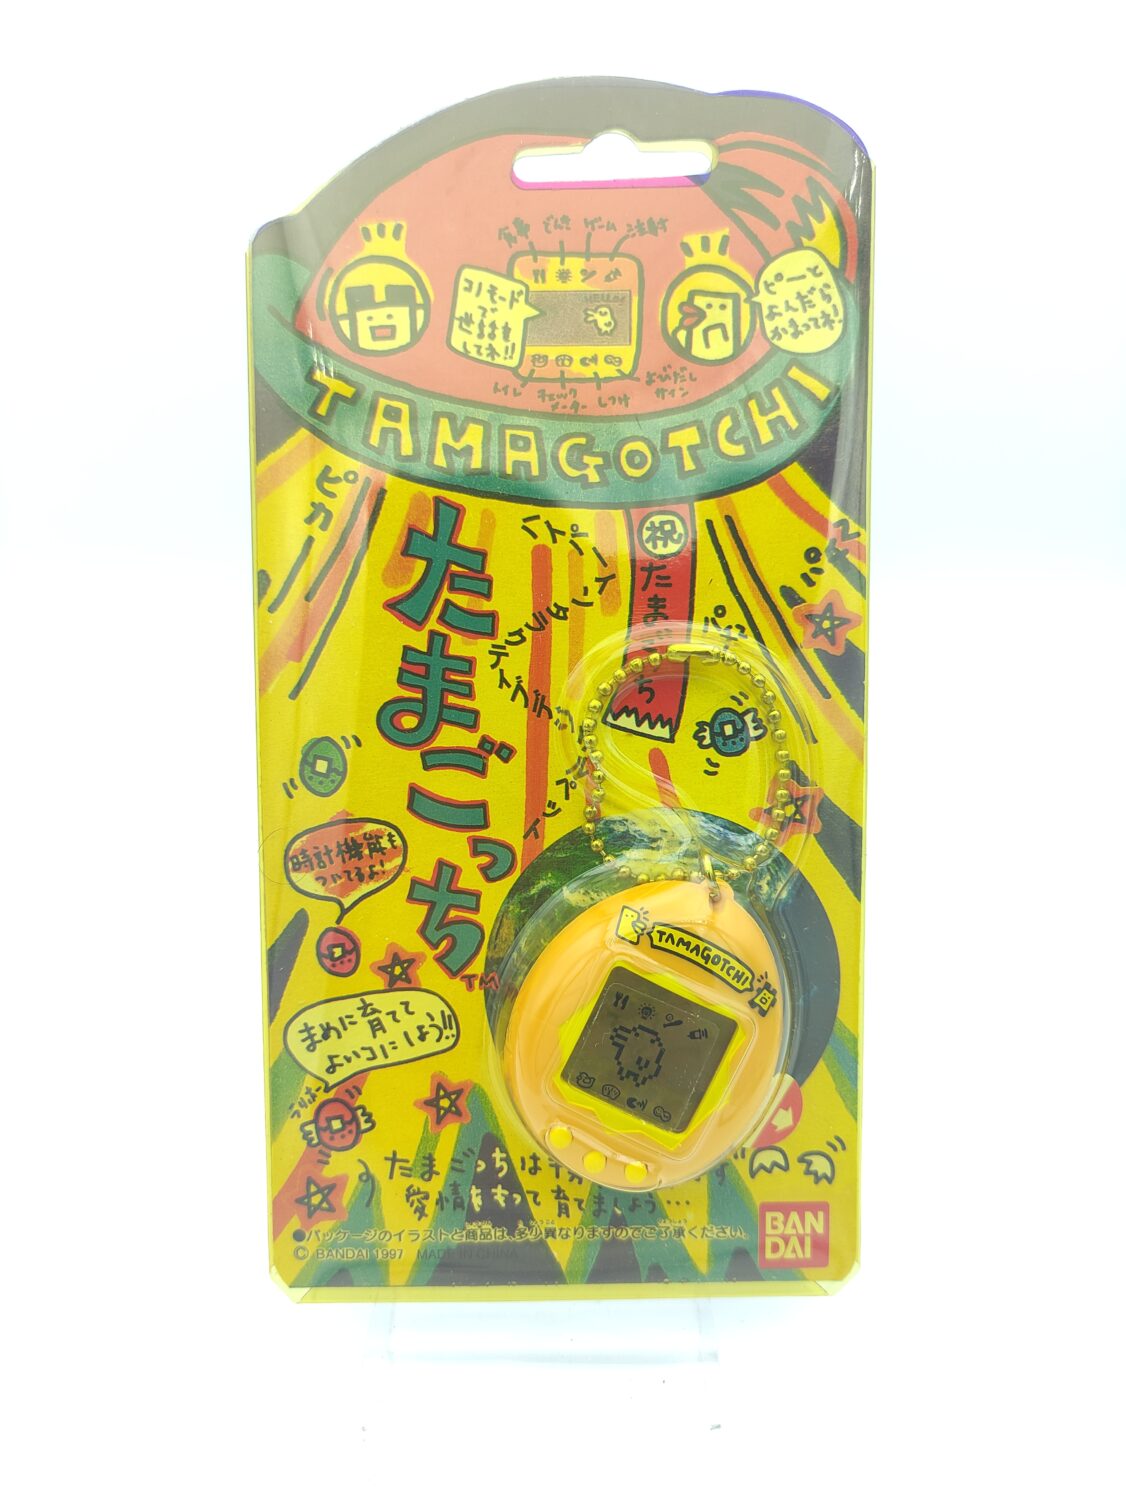 Tamagotchi Original P1/P2 yellow w/ orange Bandai 1997 English